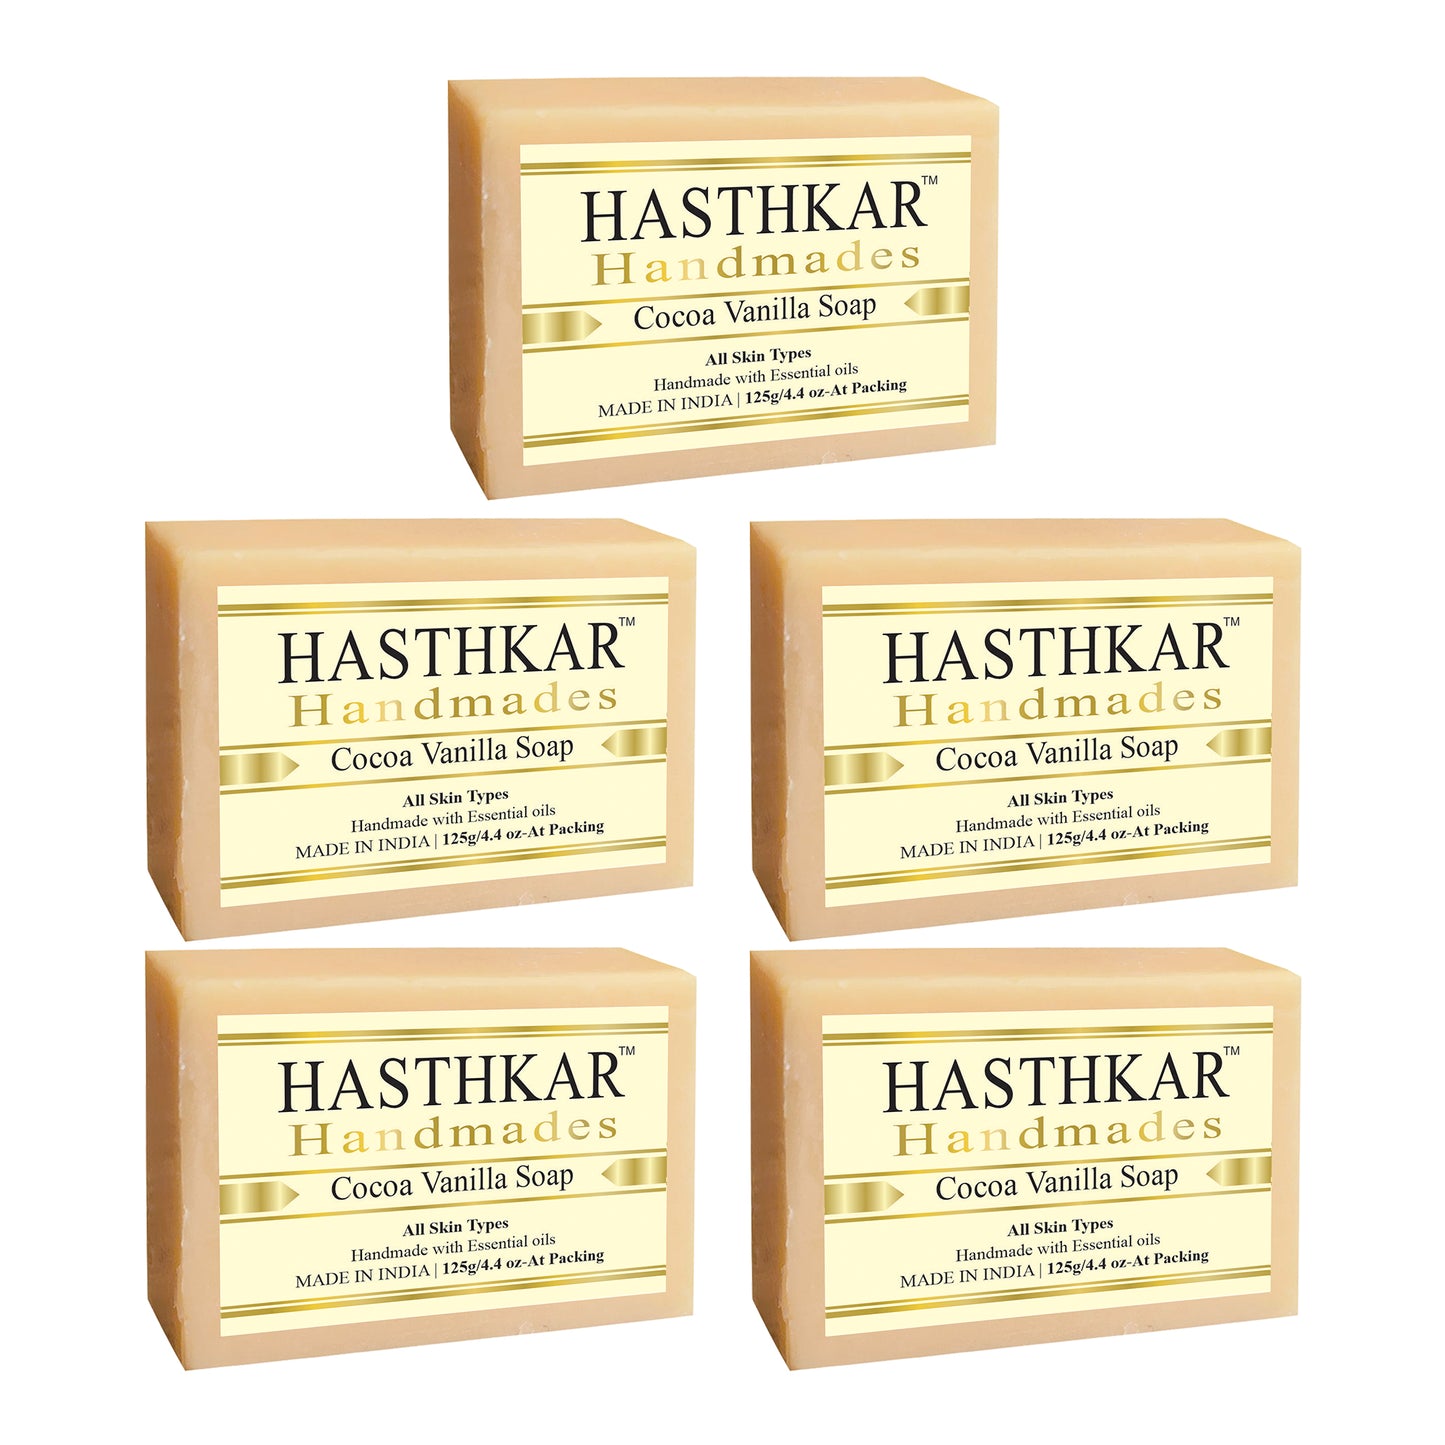 Hasthkar handmades cocoa vanilla bathing soap men women pack of 5